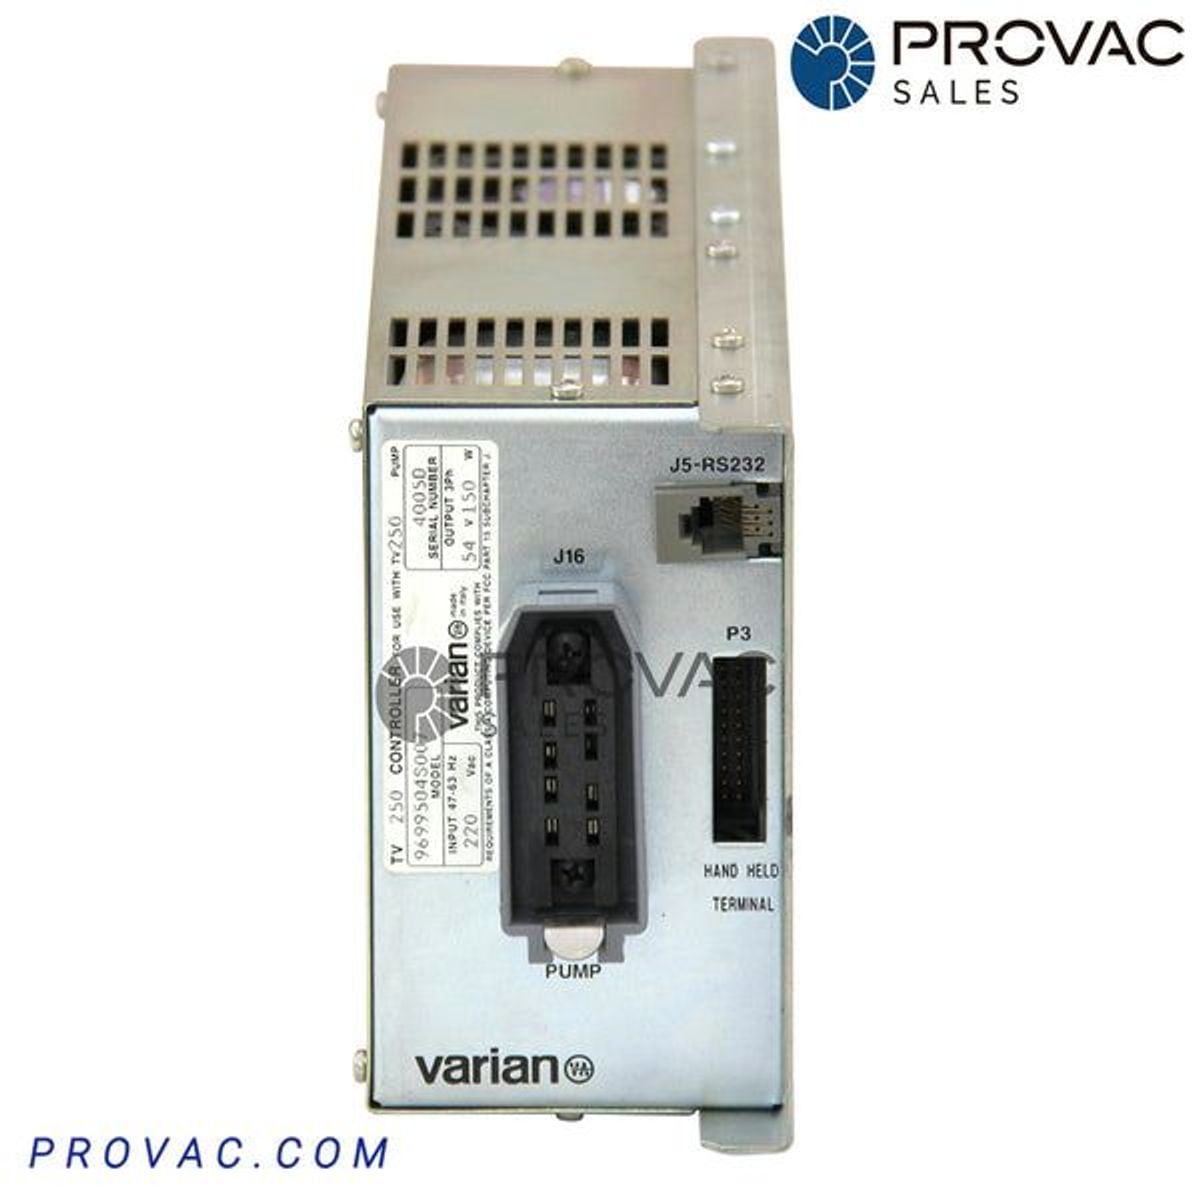 Varian TV-250 brick Turbo Pump Controller, Rebuilt Image 1